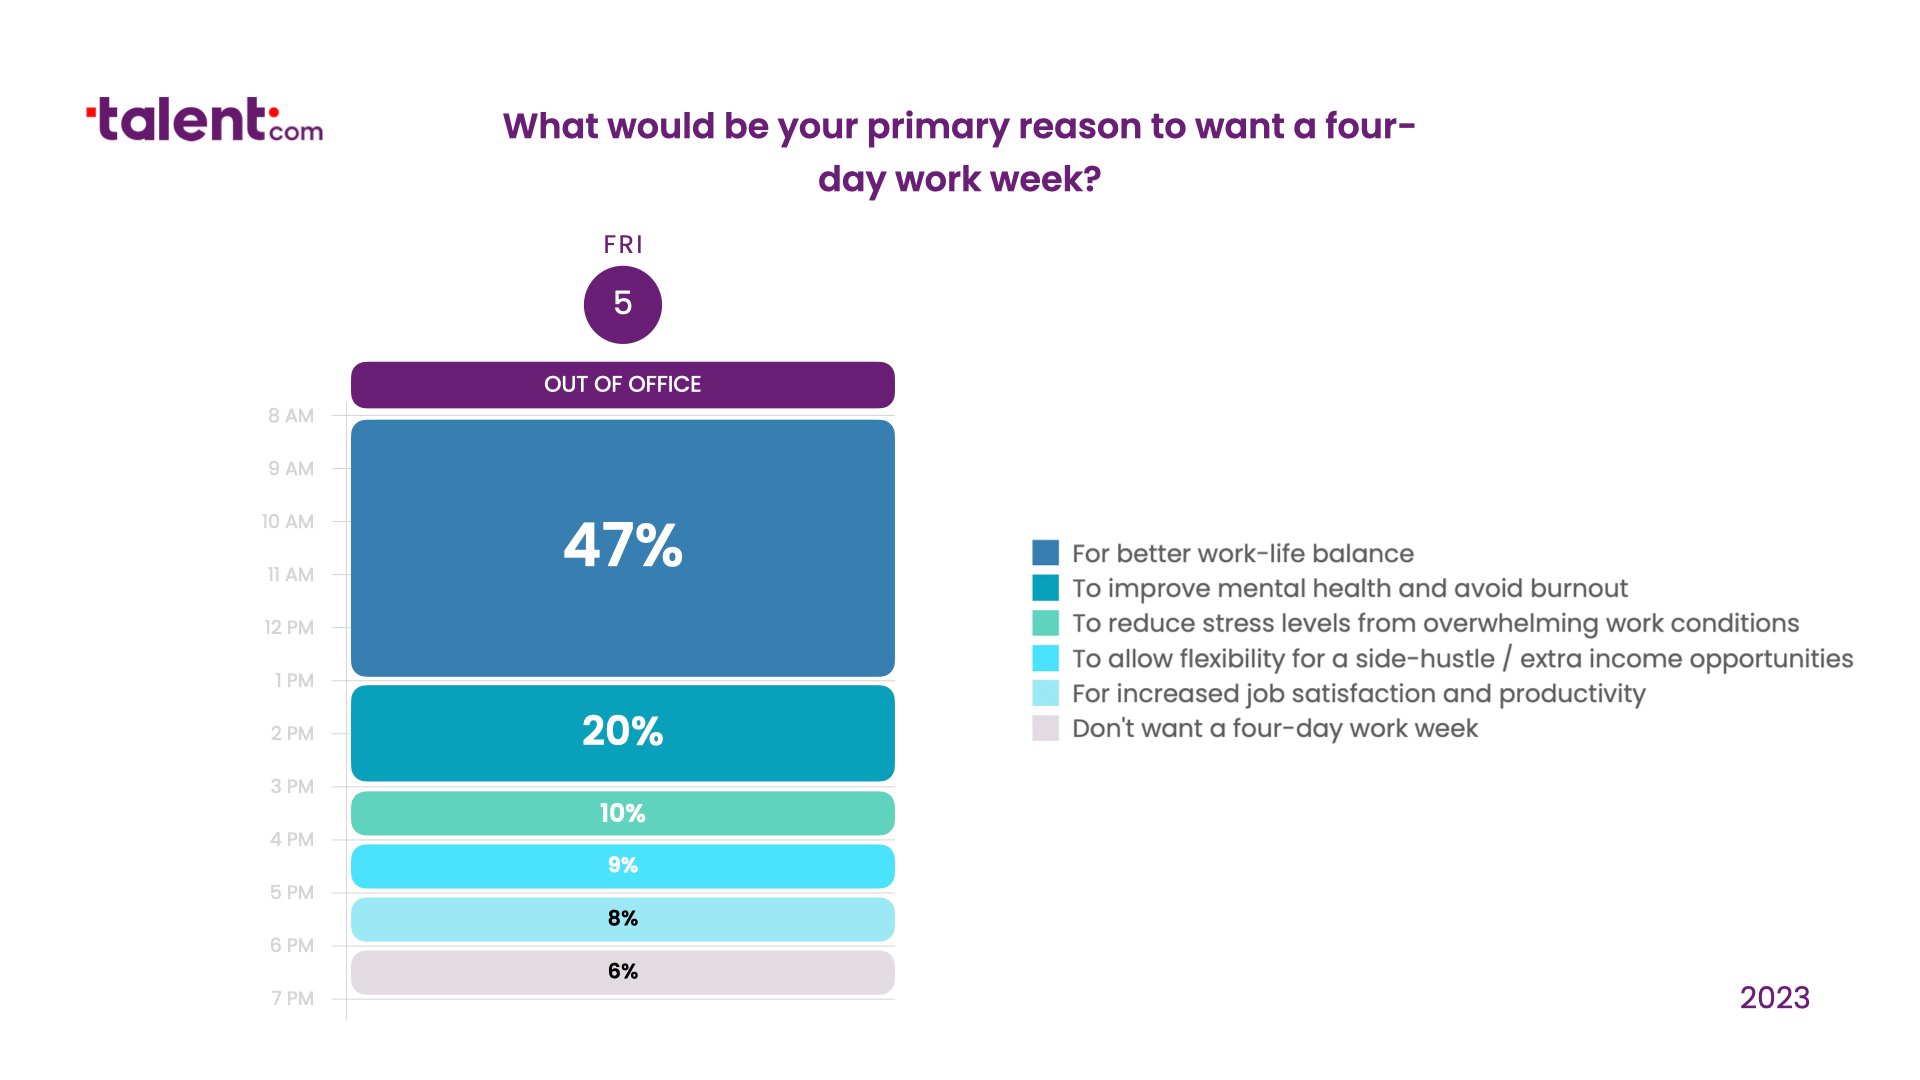 Why a 4-day work week?